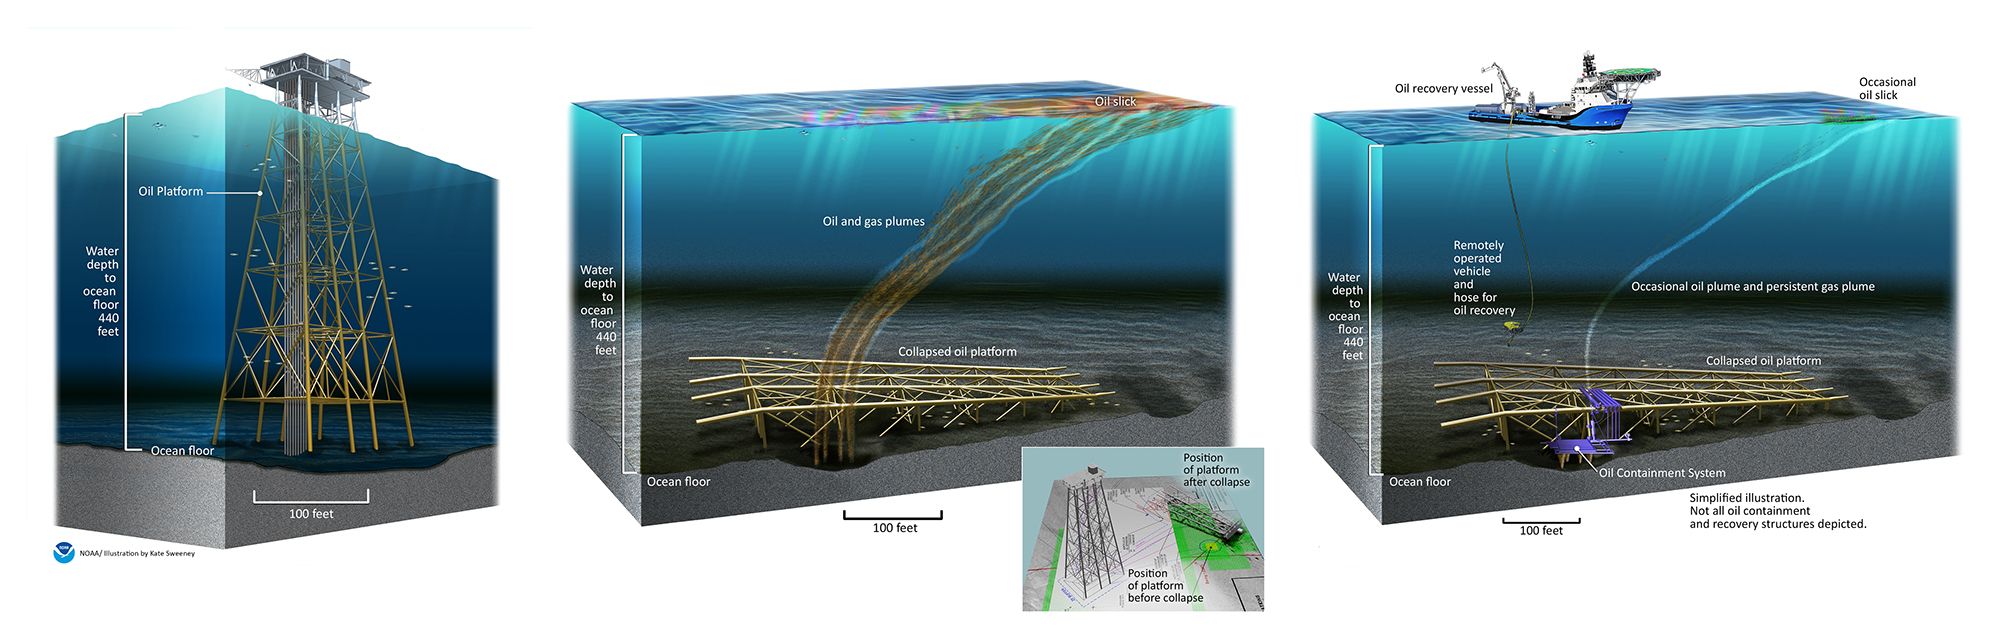 Graphics depicting an underwater oil platform.